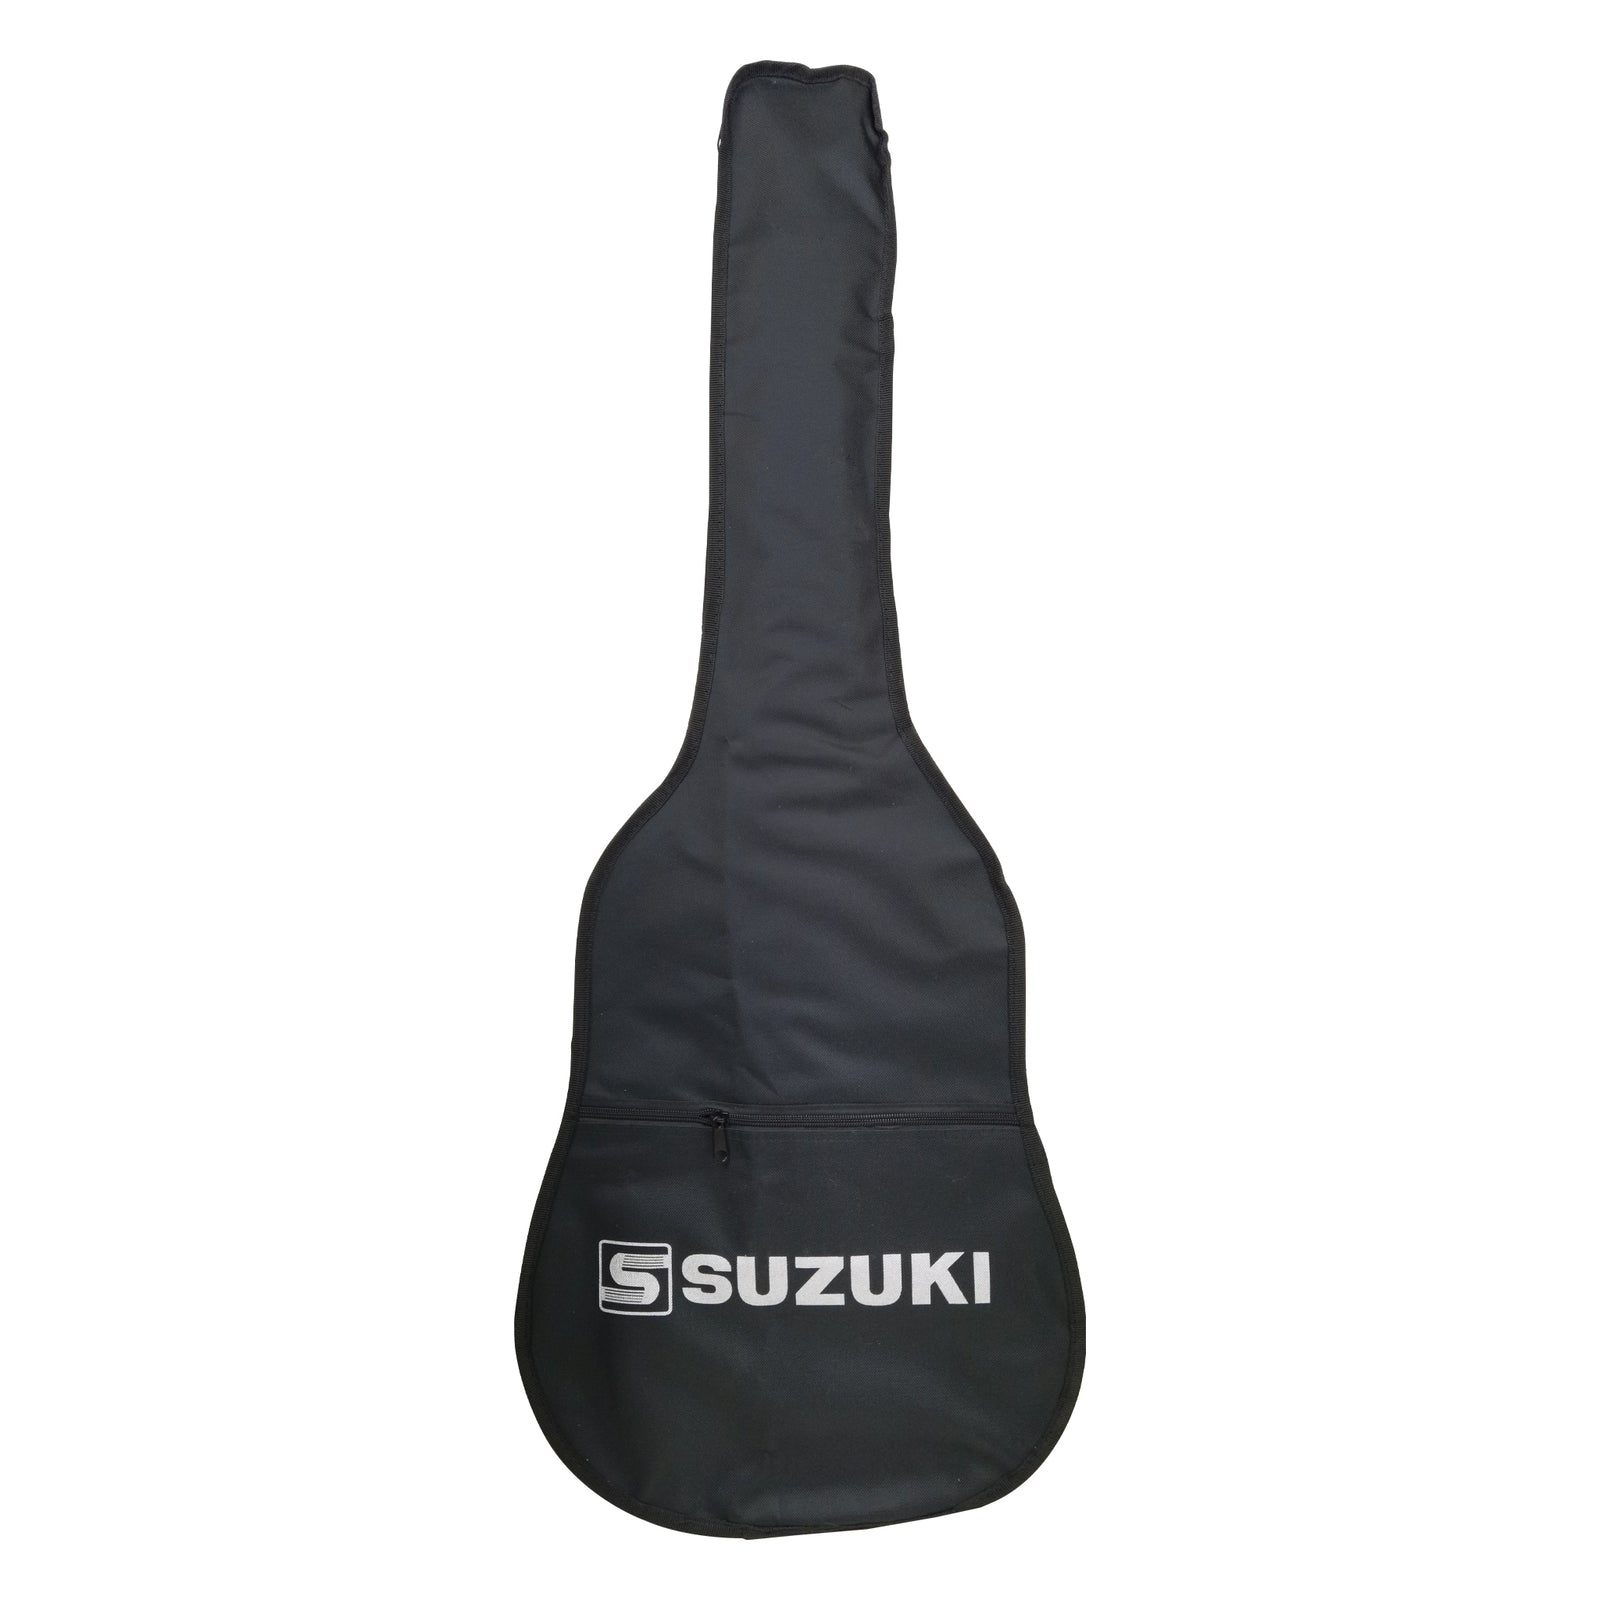 Suzuki SCG-11 Classical Guitar 3/4 size